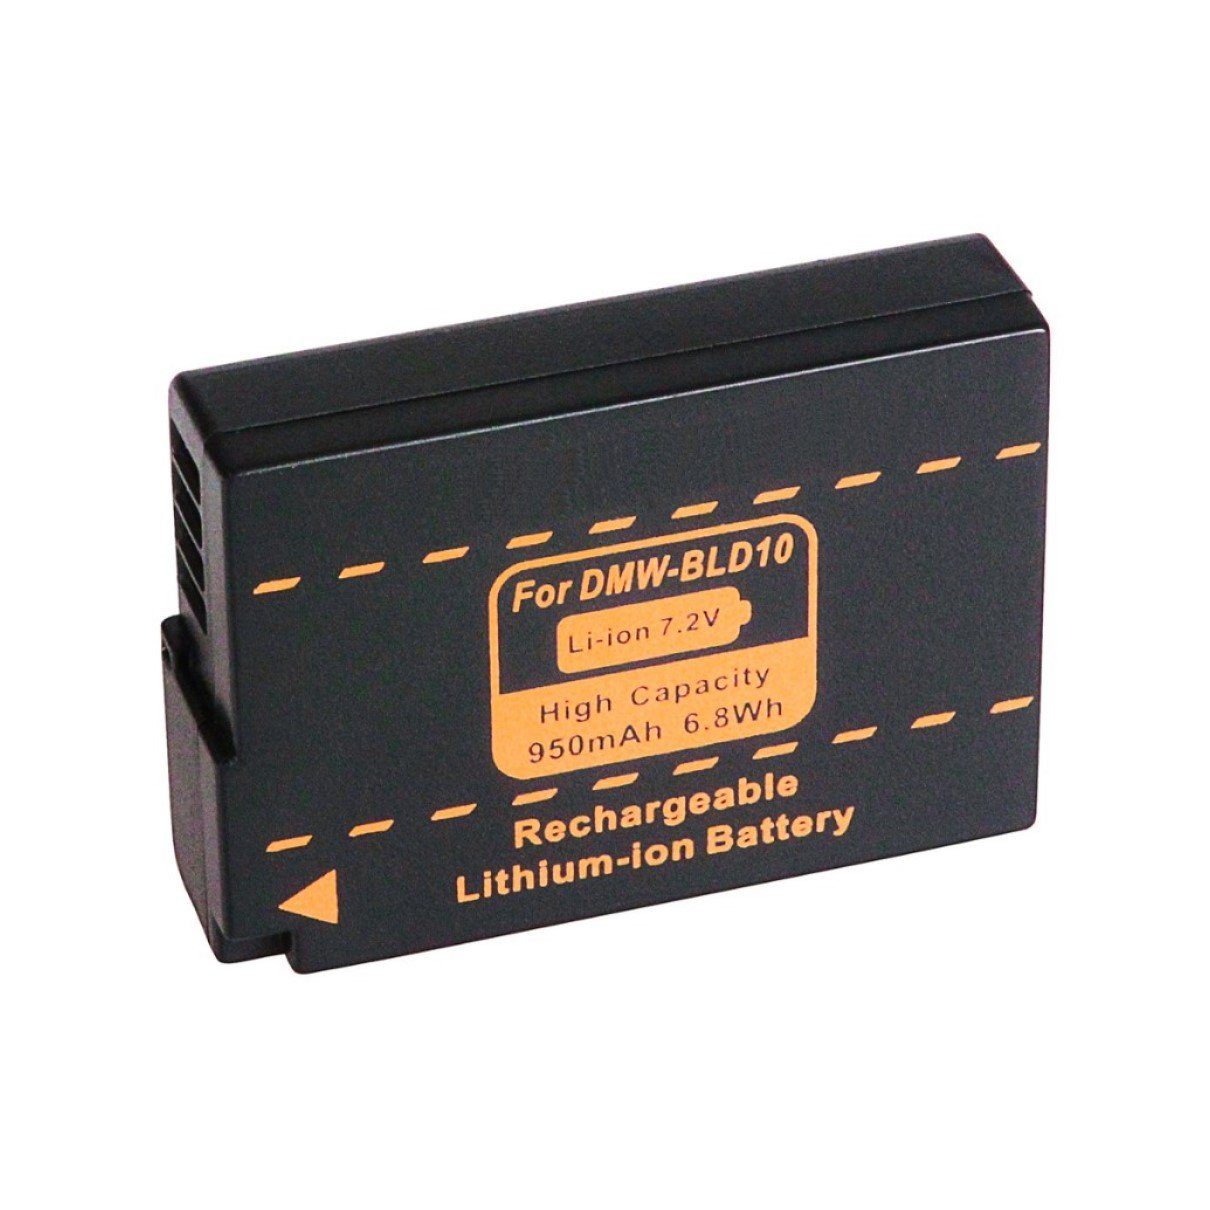 GOLDBATT Akku für Panasonic BLD10 BLD10E DMC-GF2 GF2 Kamera-Akku Ersatzakku 950 mAh (7,2 V, 1 St), 100% kompatibel mit den Original Akkus durch maßgefertigte Passform inklusive Überhitzungsschutz